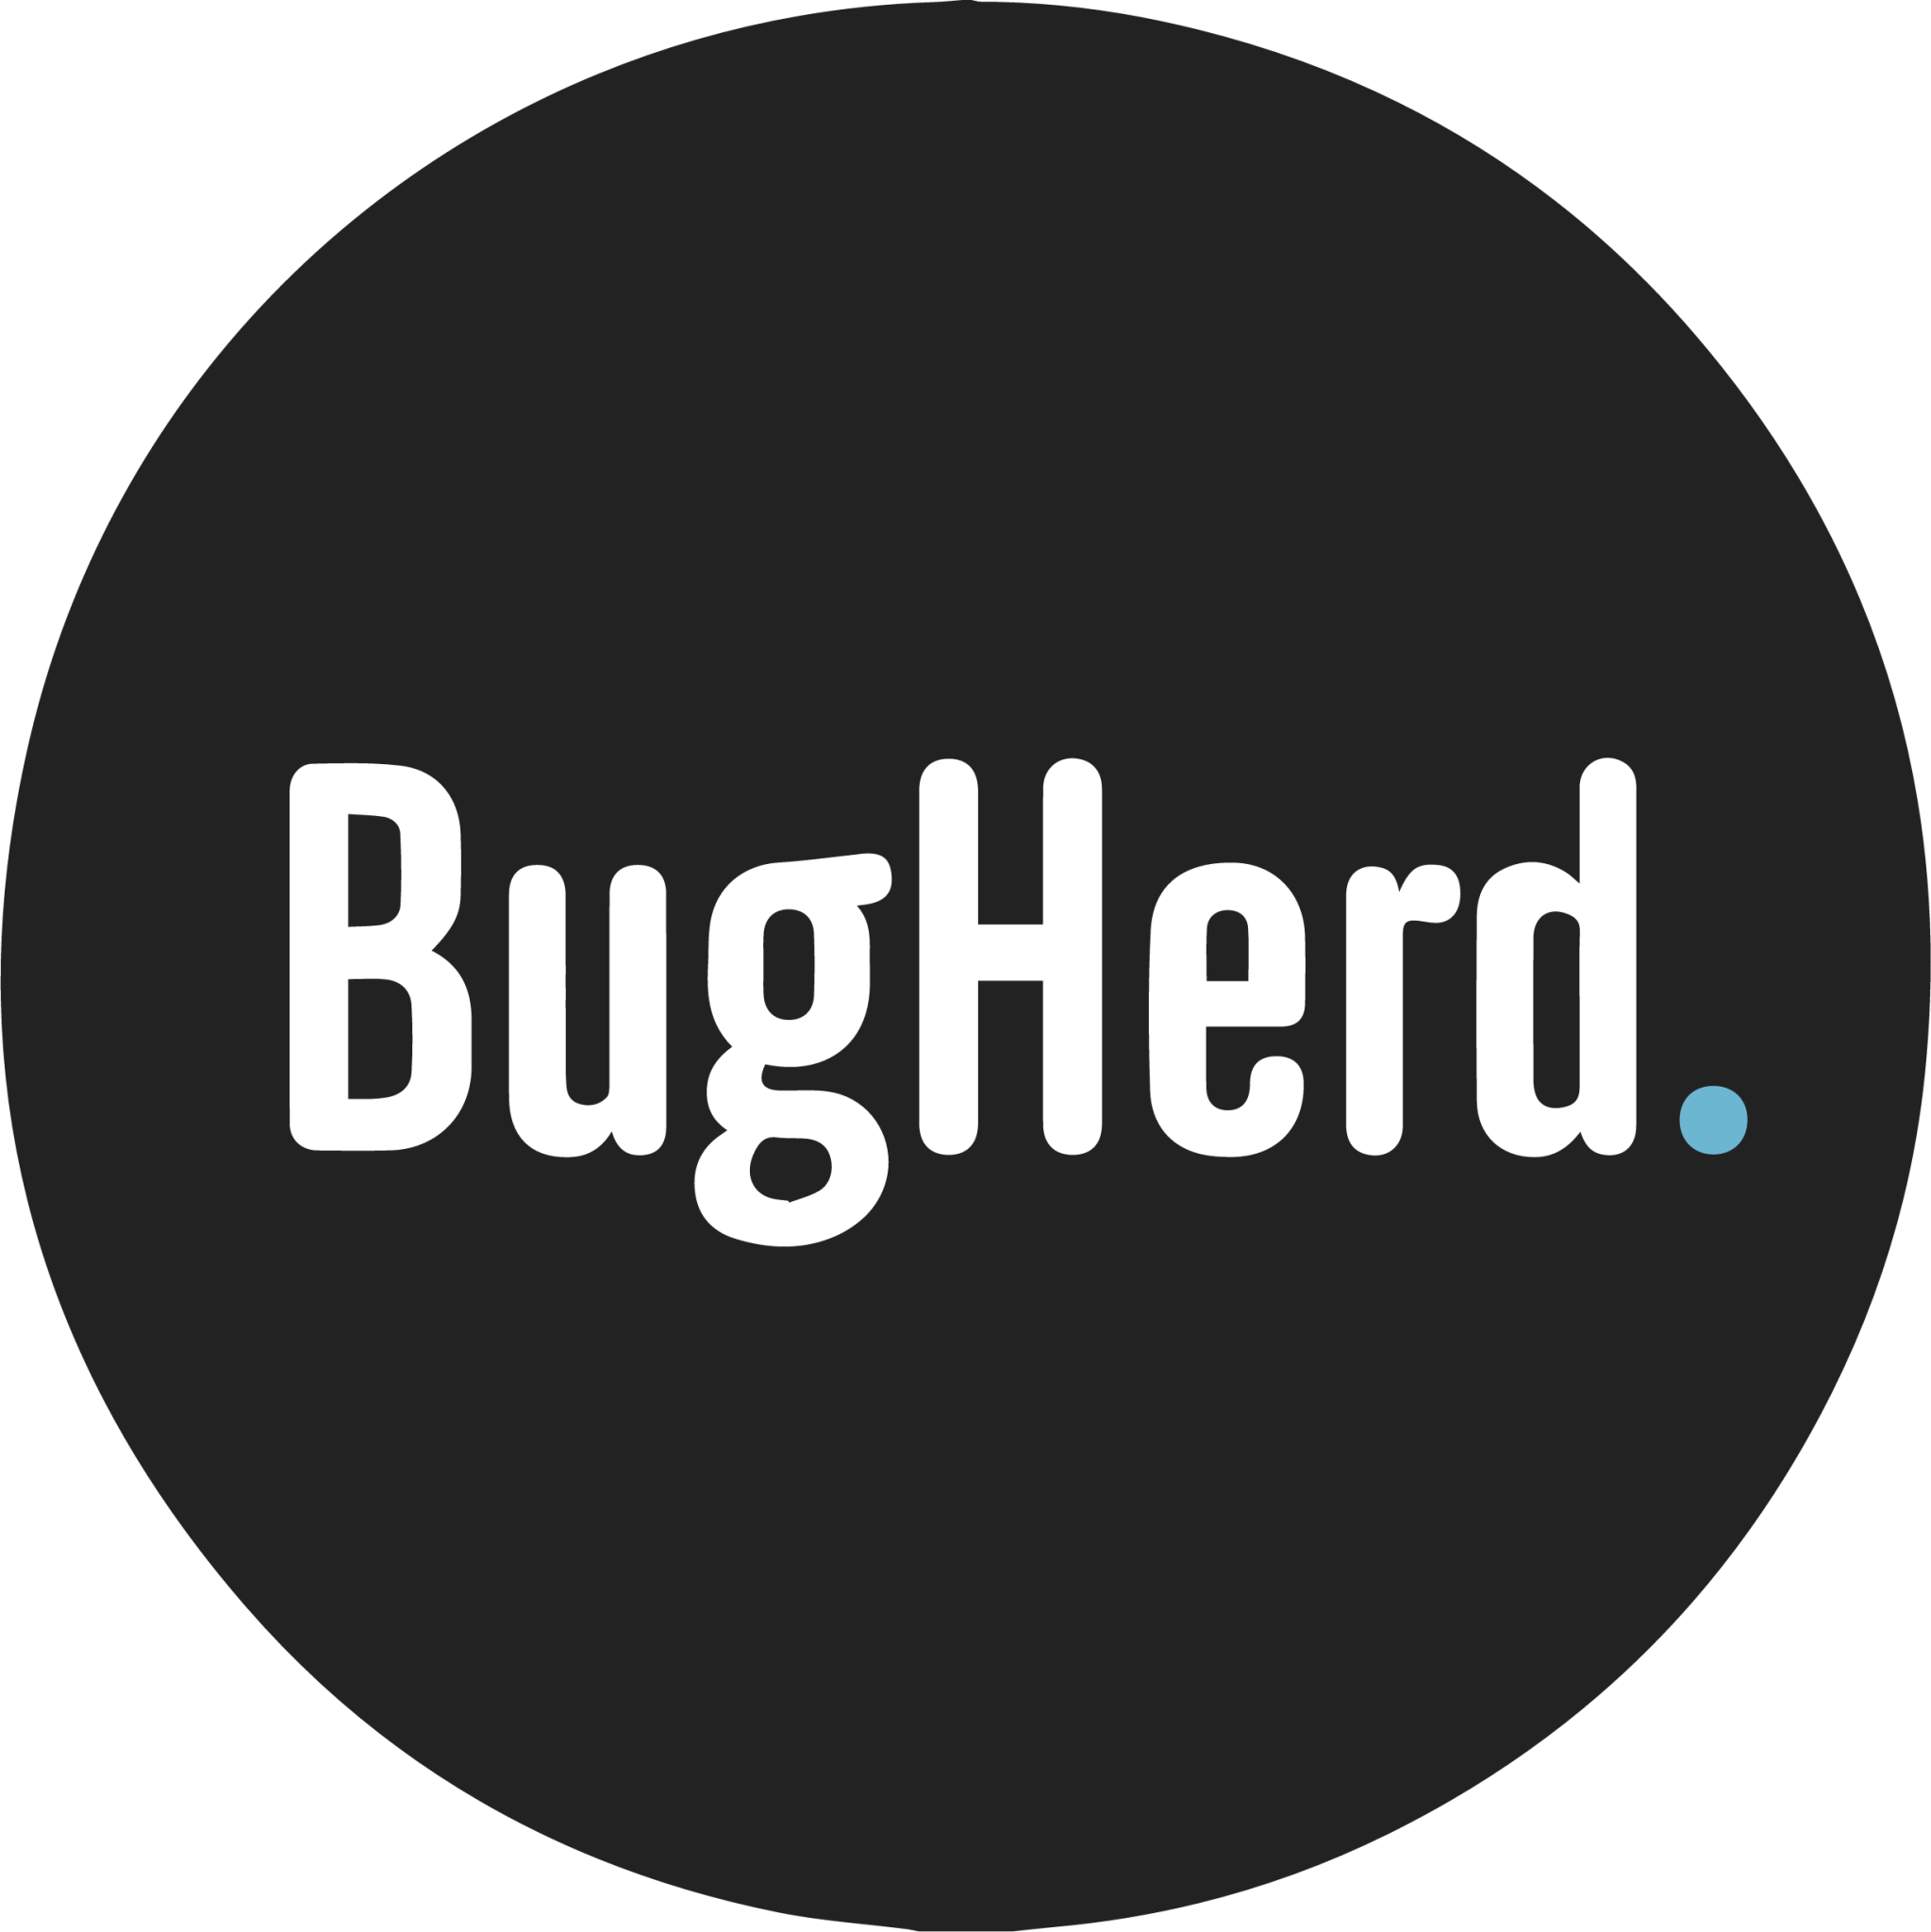 bugherd icon